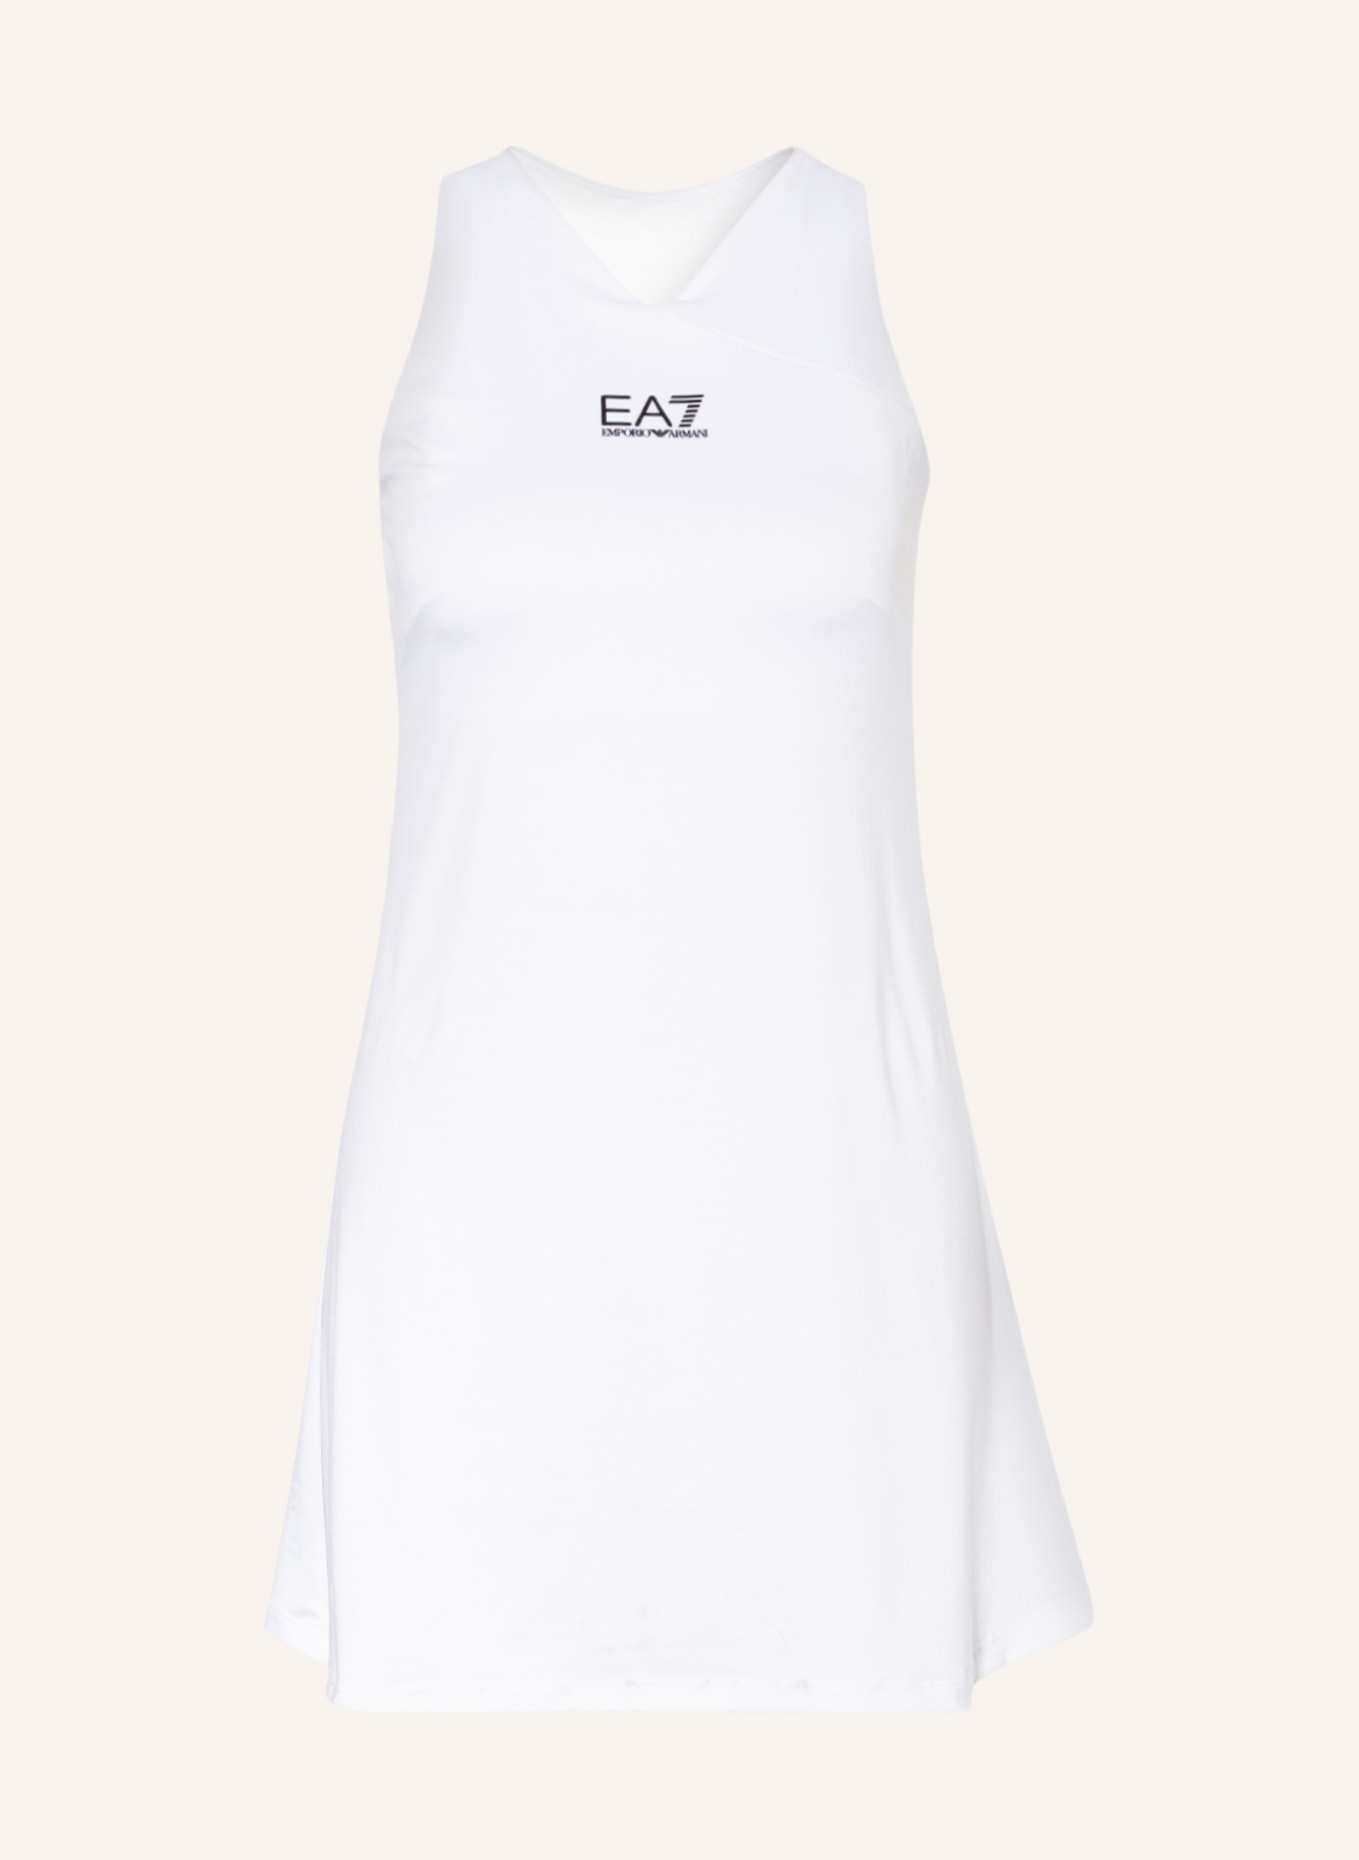 EA7 EMPORIO ARMANI Tenniskleid mit Mesh, Farbe: WEISS (Bild 1)